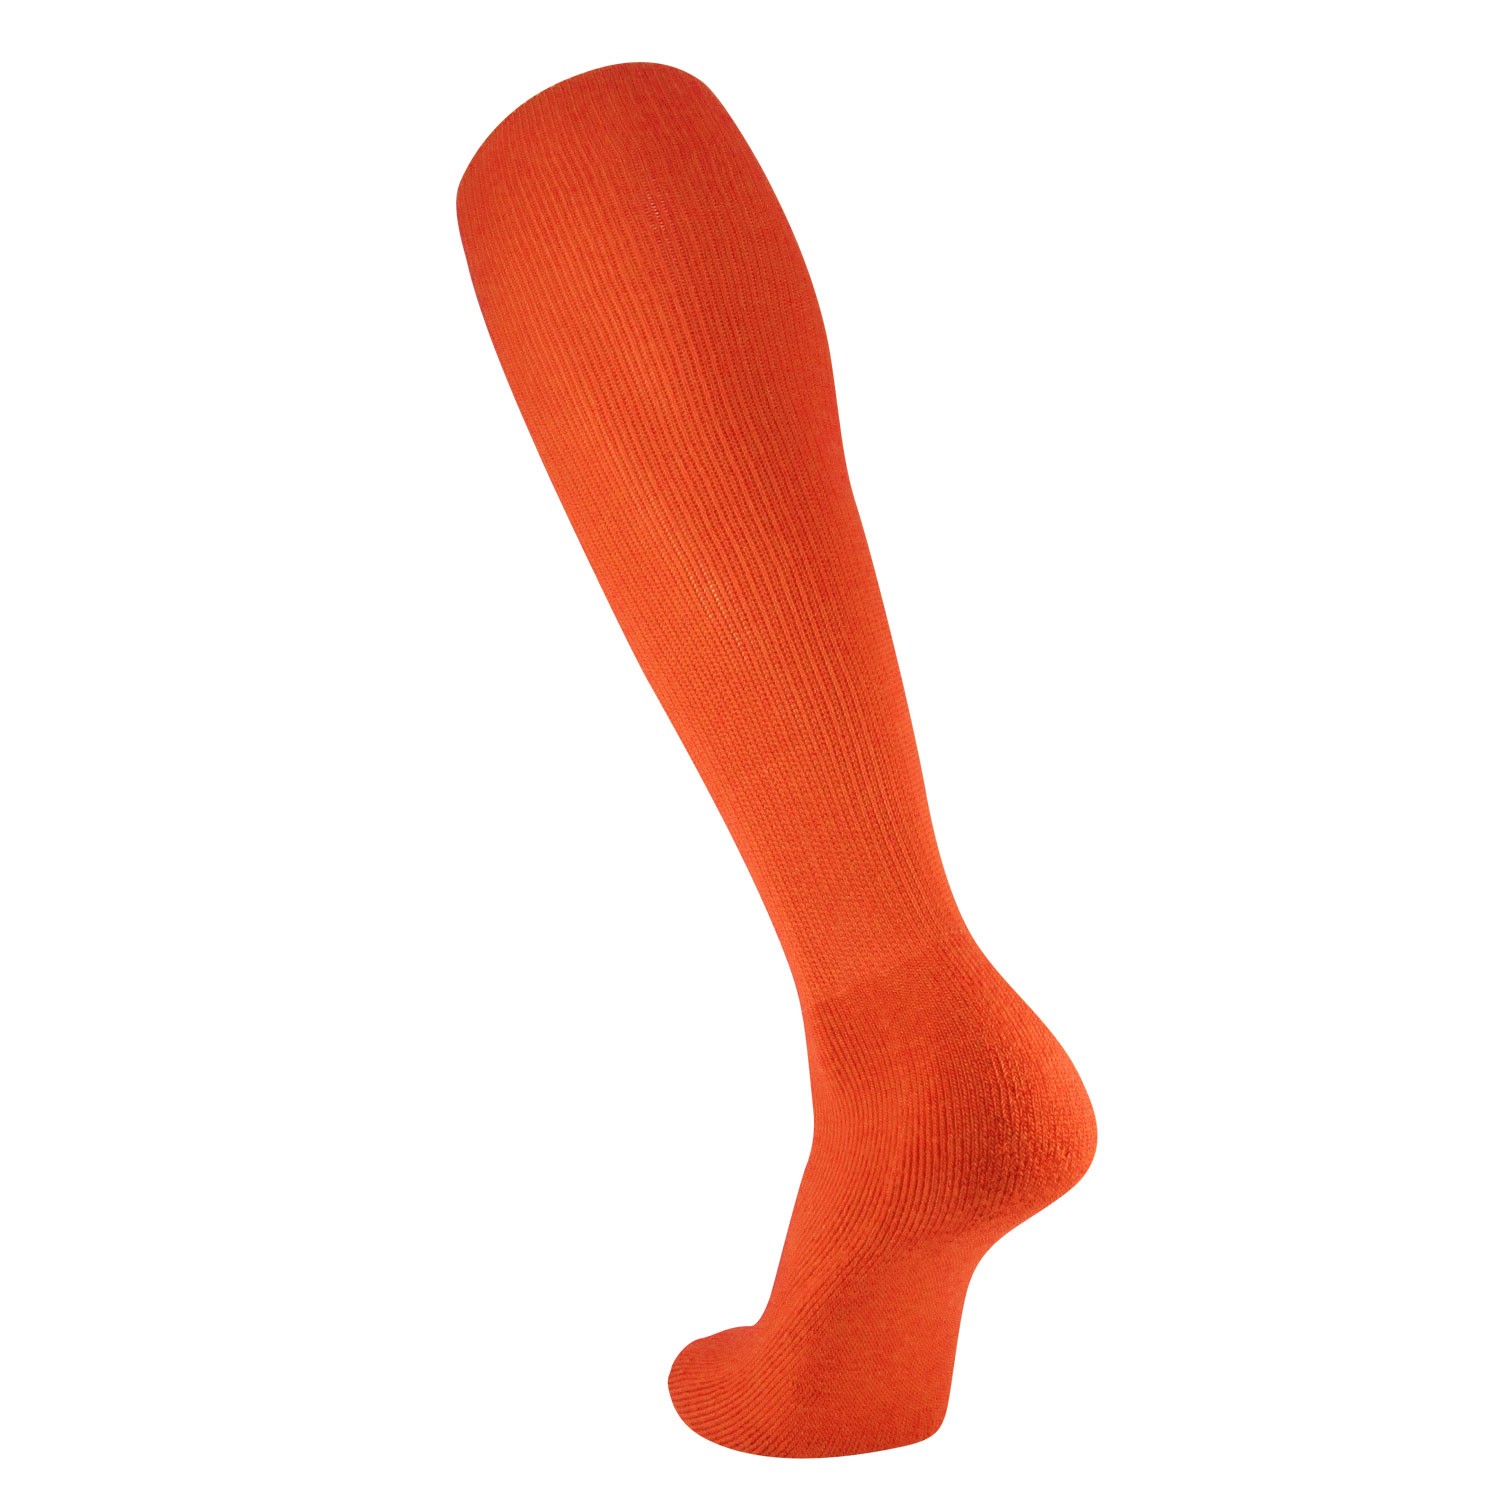 Sharp Steel Sock Interchangeable Set - Sizes 0-2.5 US – Icon Fiber Arts